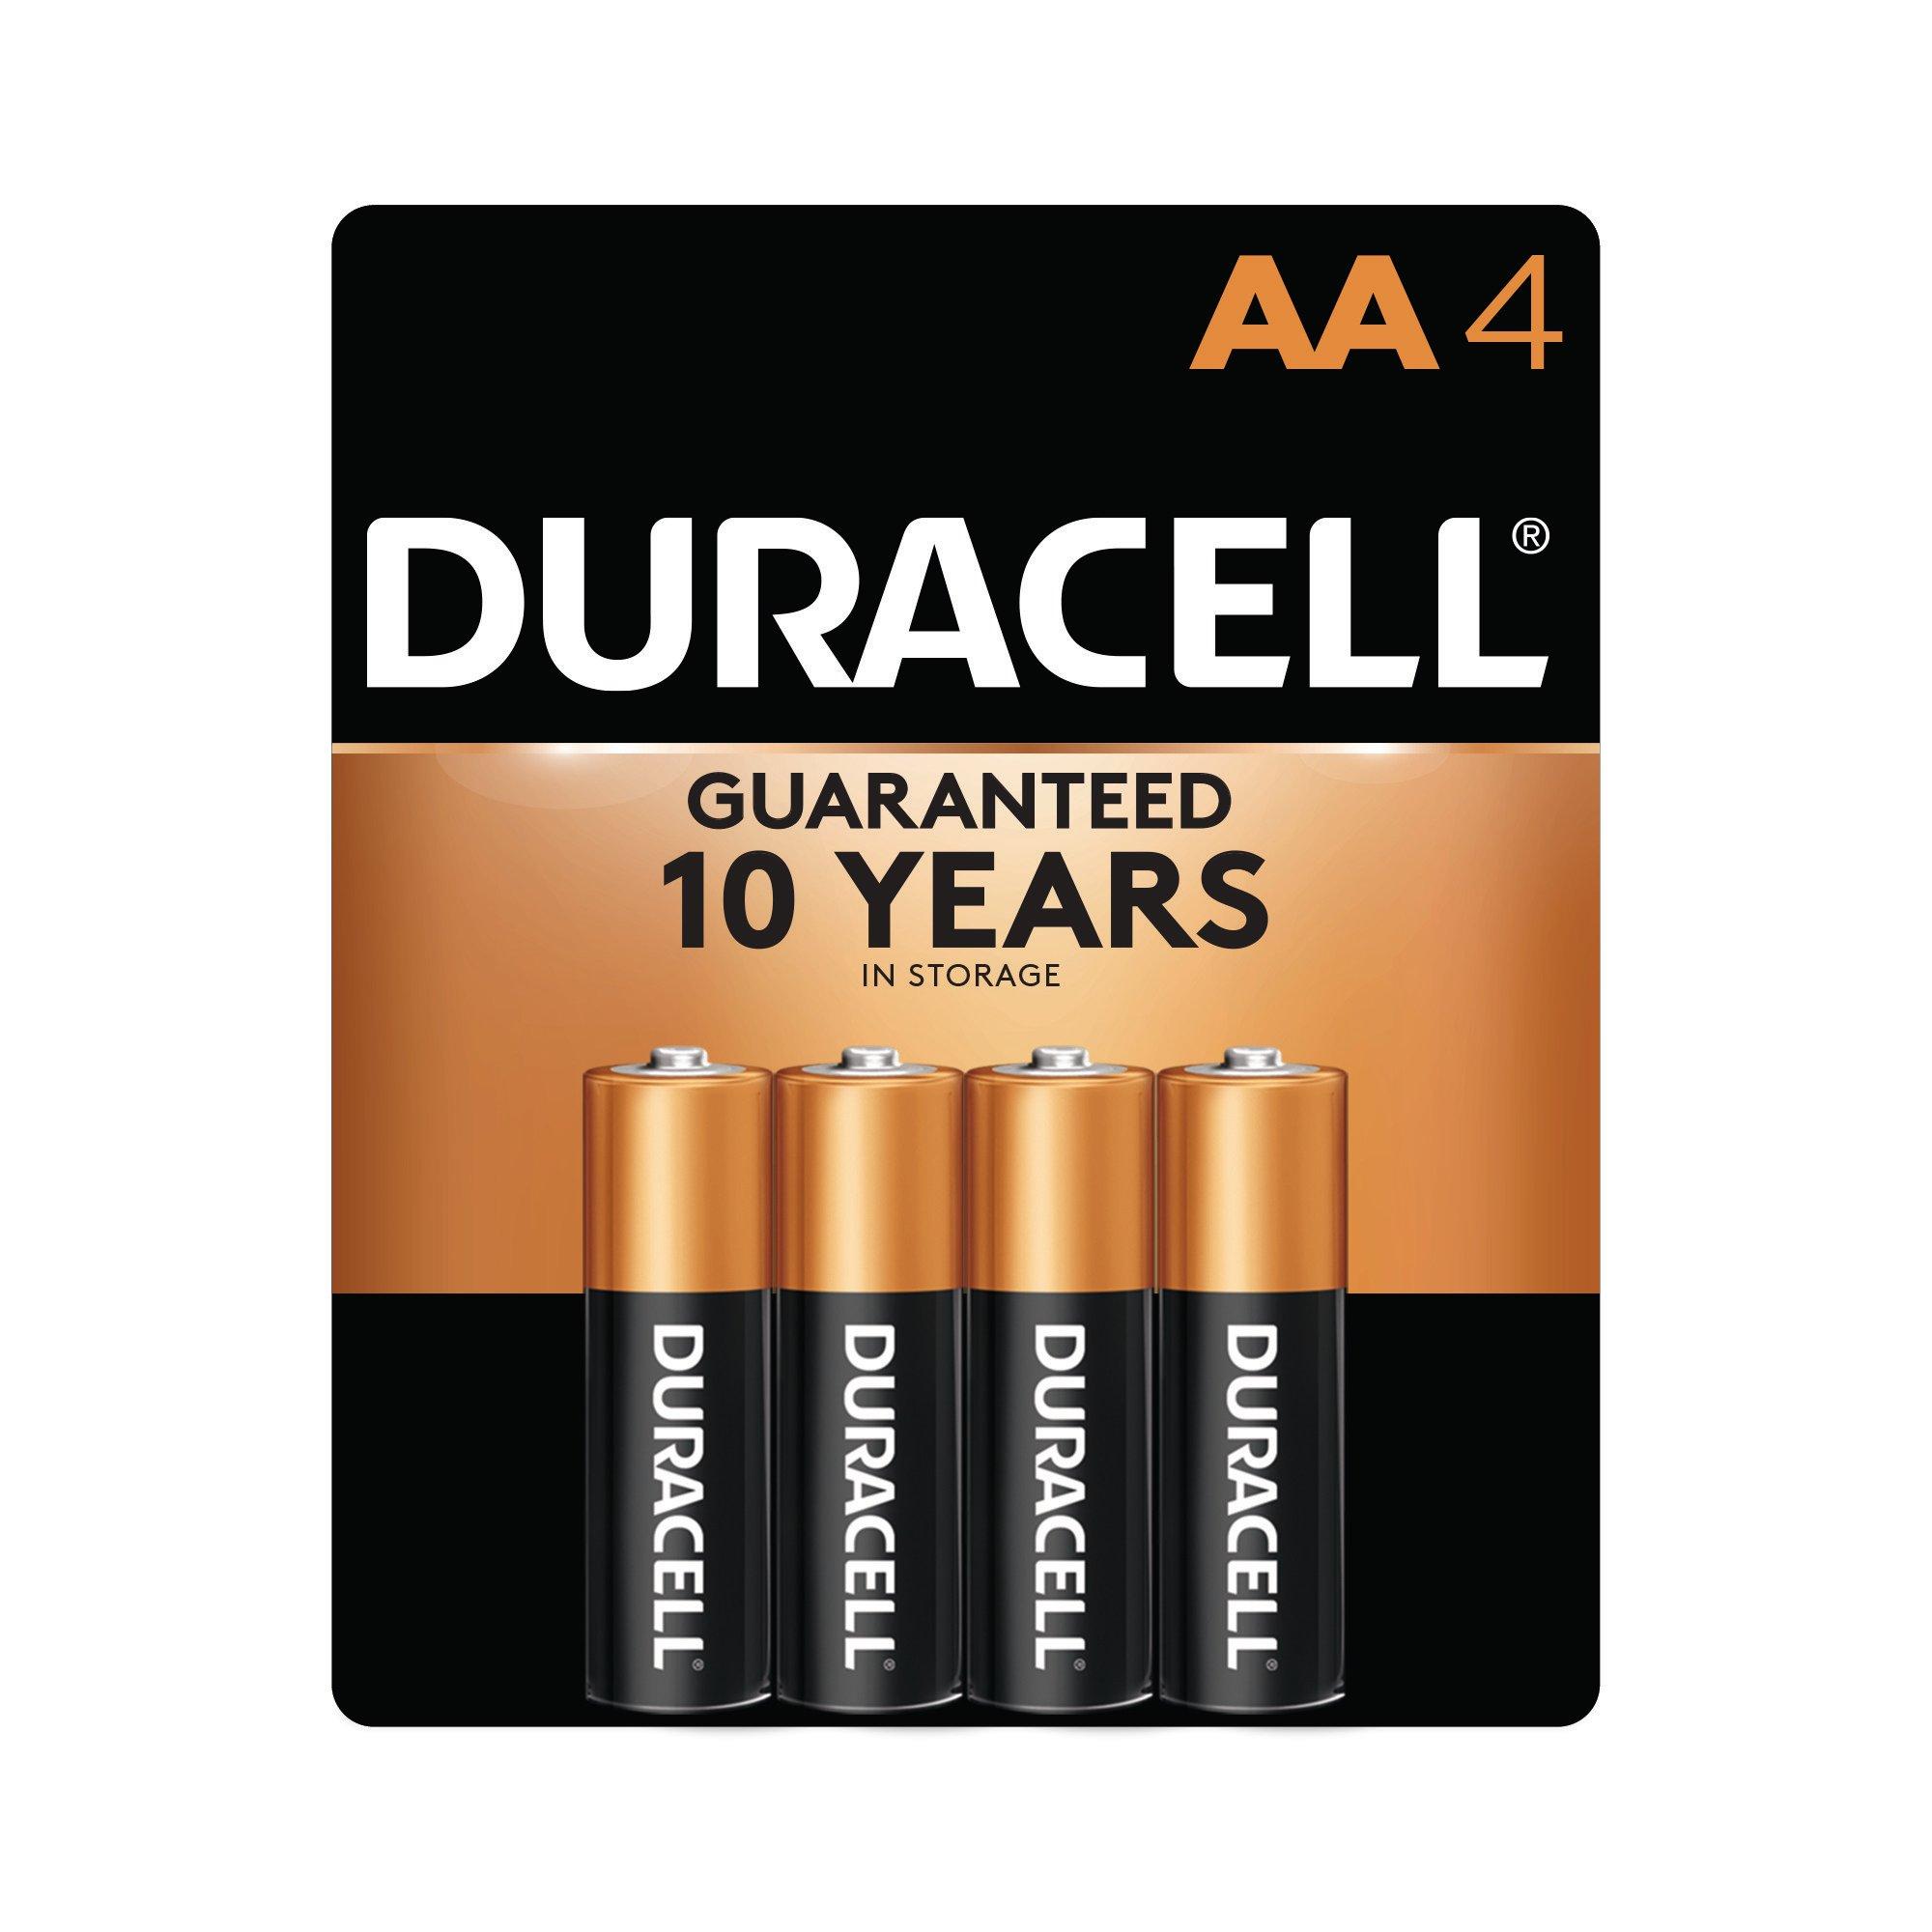 Duracell Coppertop AA Batteries | GameStop